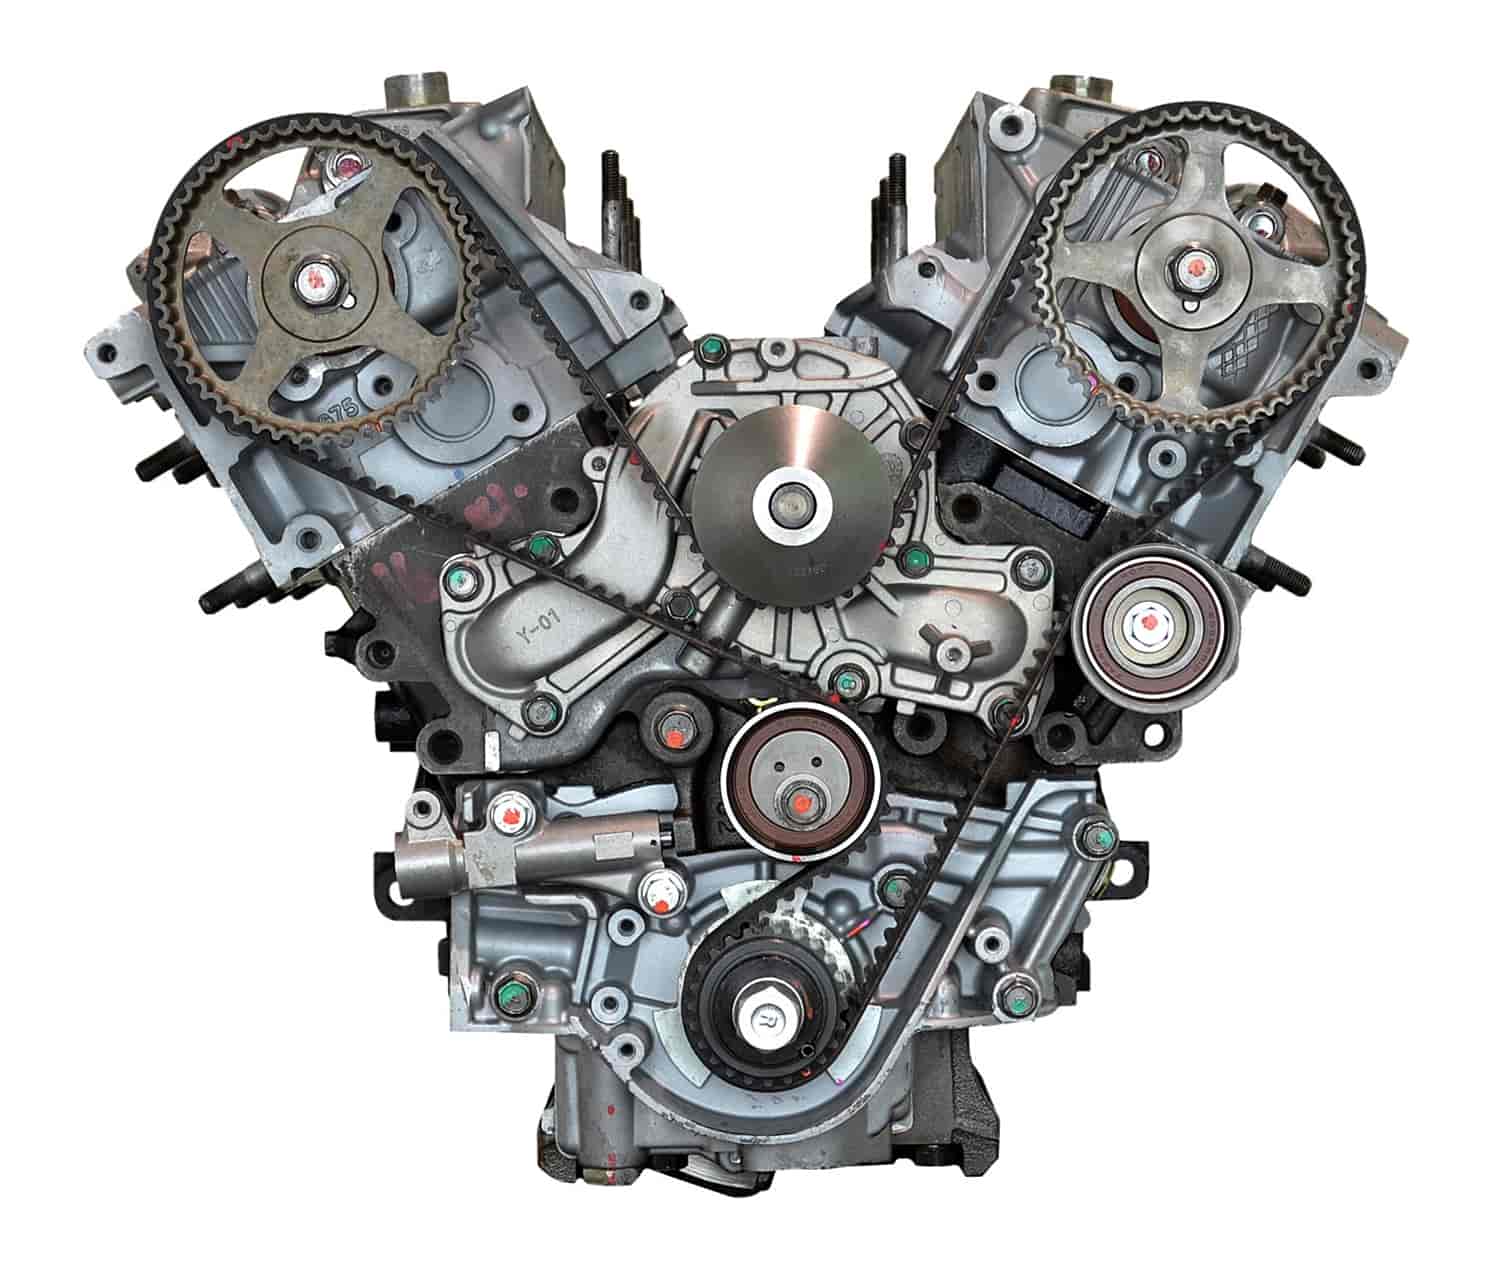 Remanufactured Crate Engine for 2003-2006 Mitsubishi Montero with 3.8L V6